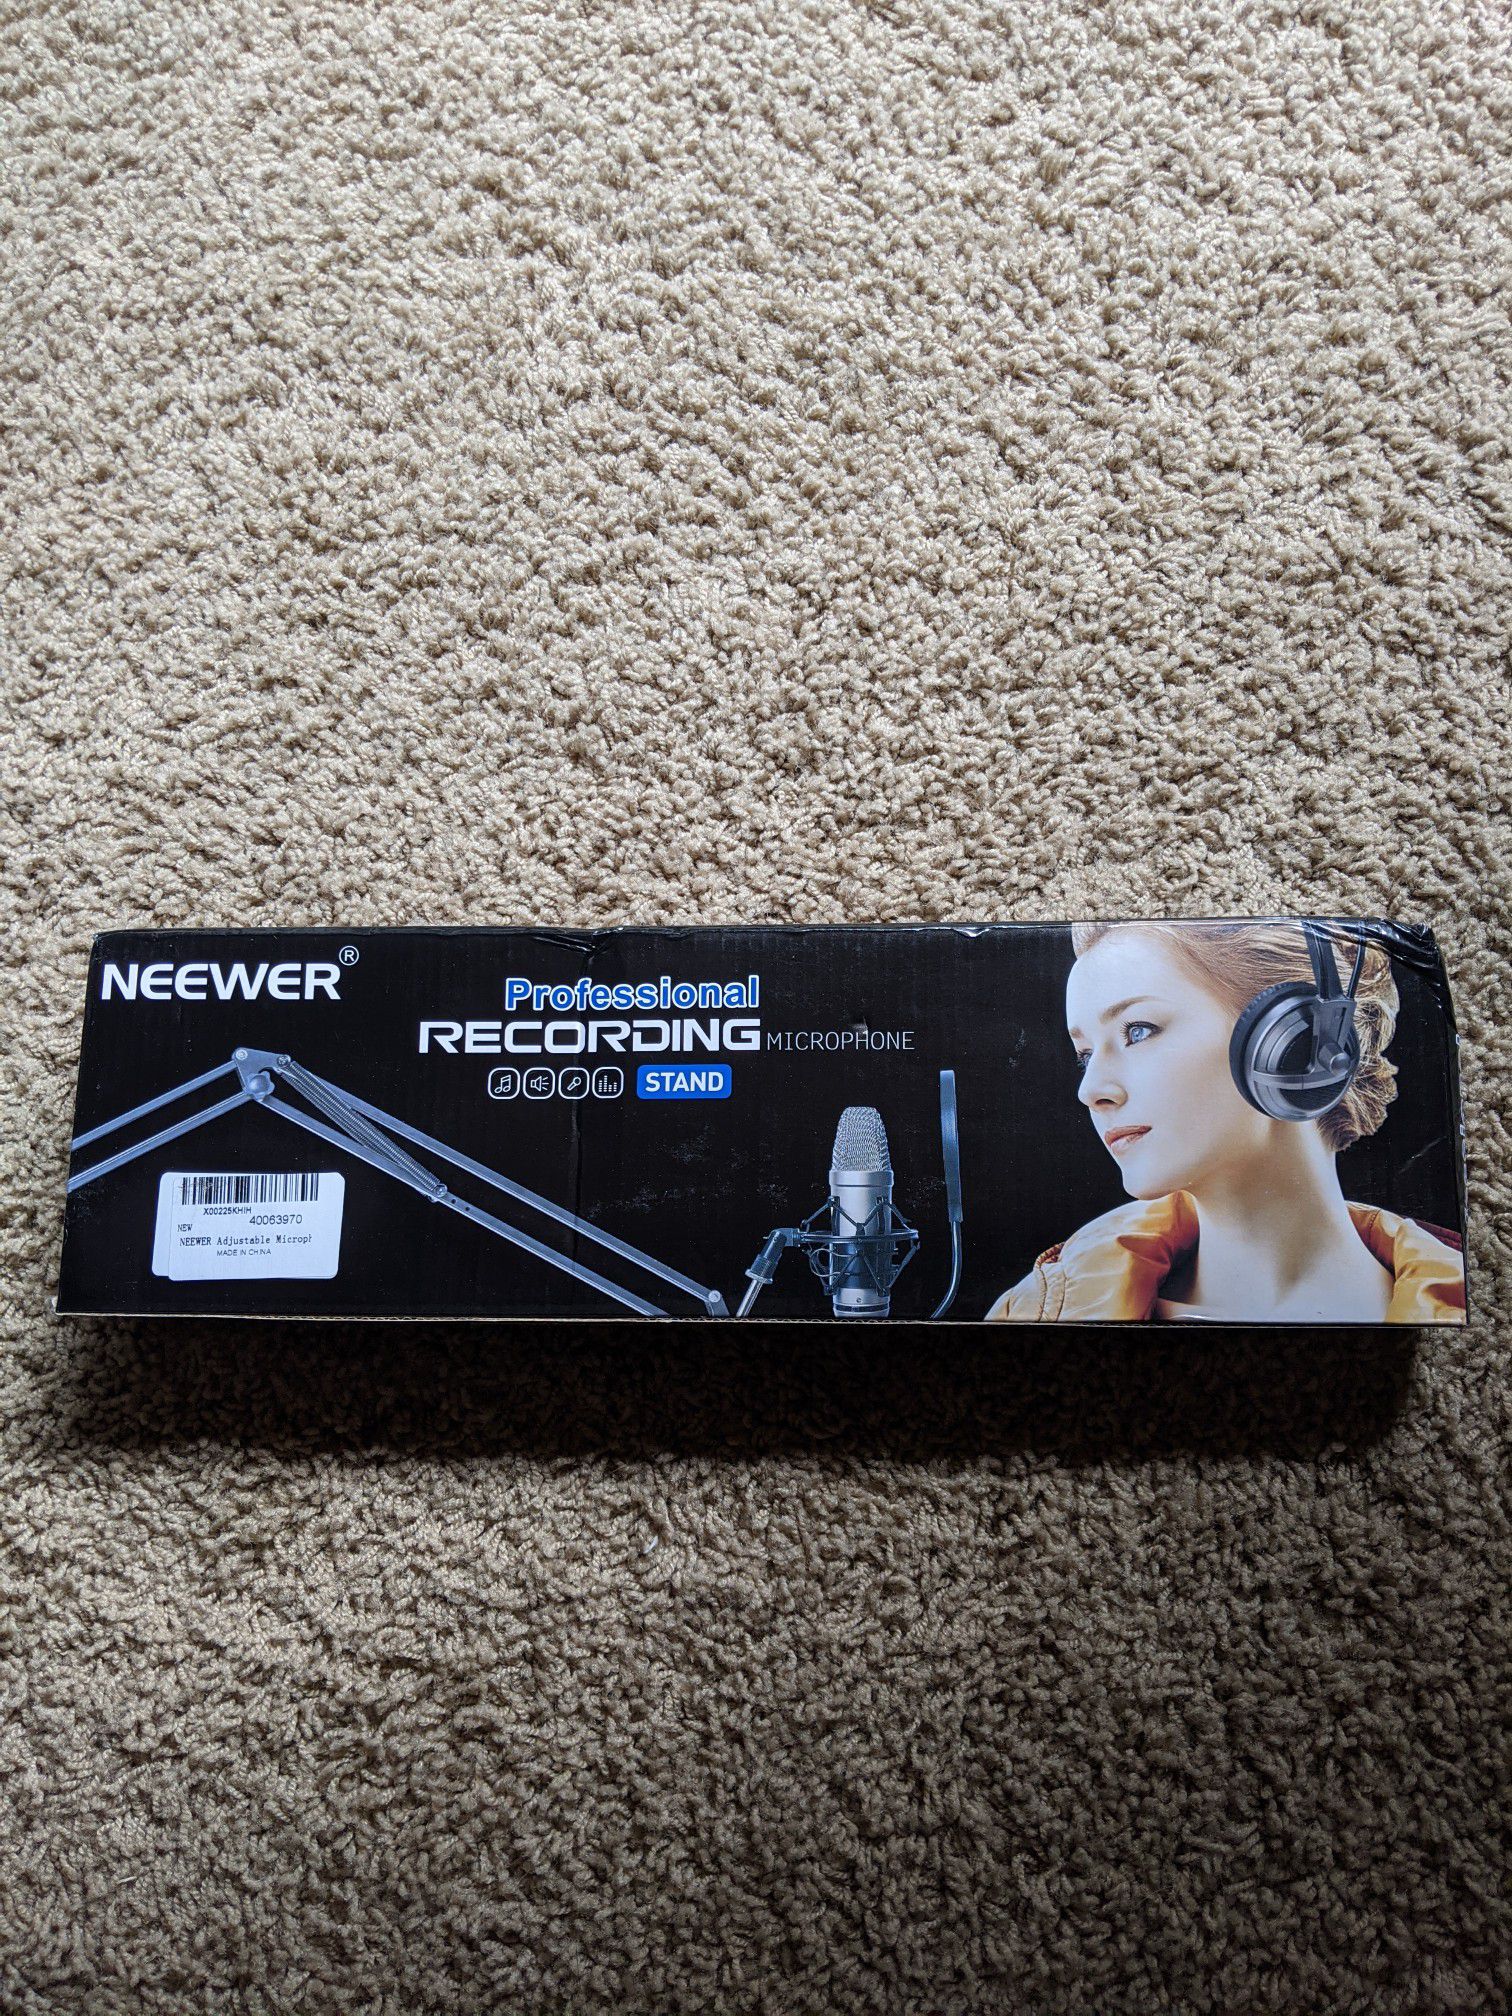 Neewer microphone stand